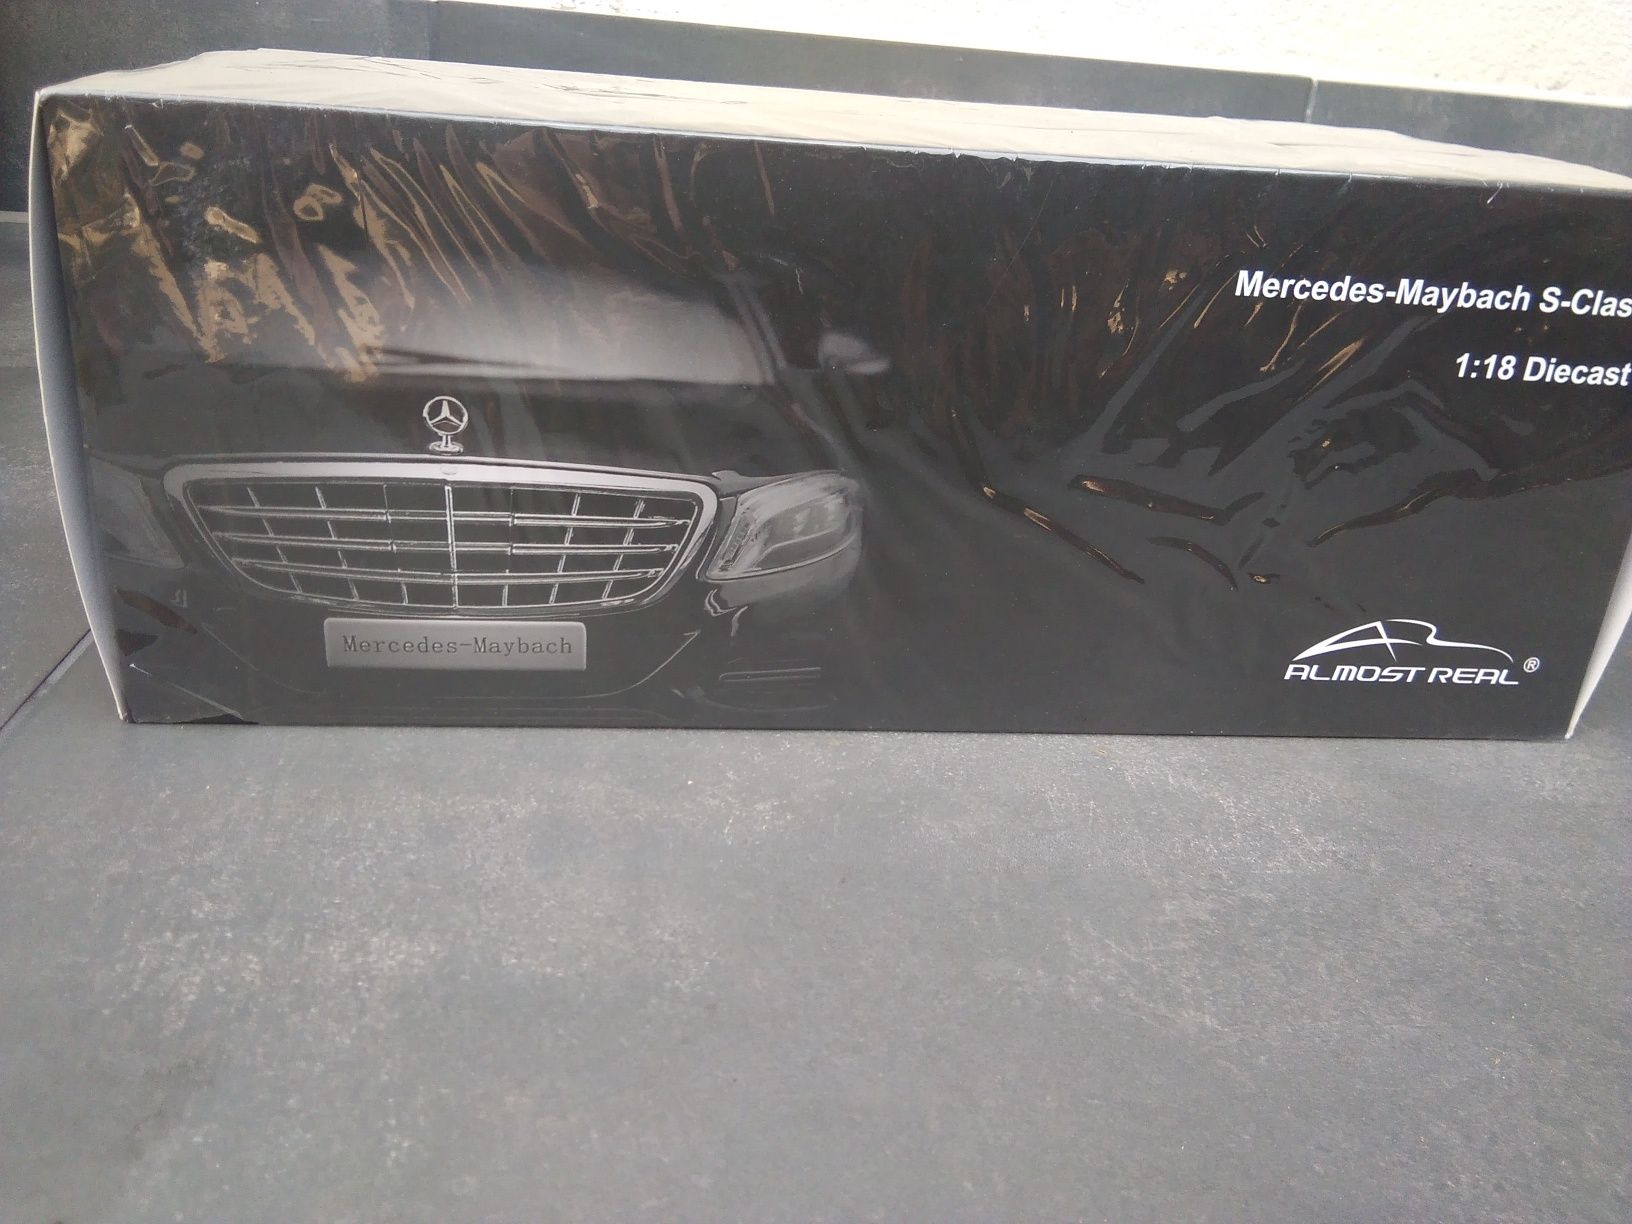 Mercedes Meybach S Class Almost real auto art kyocho minichamps